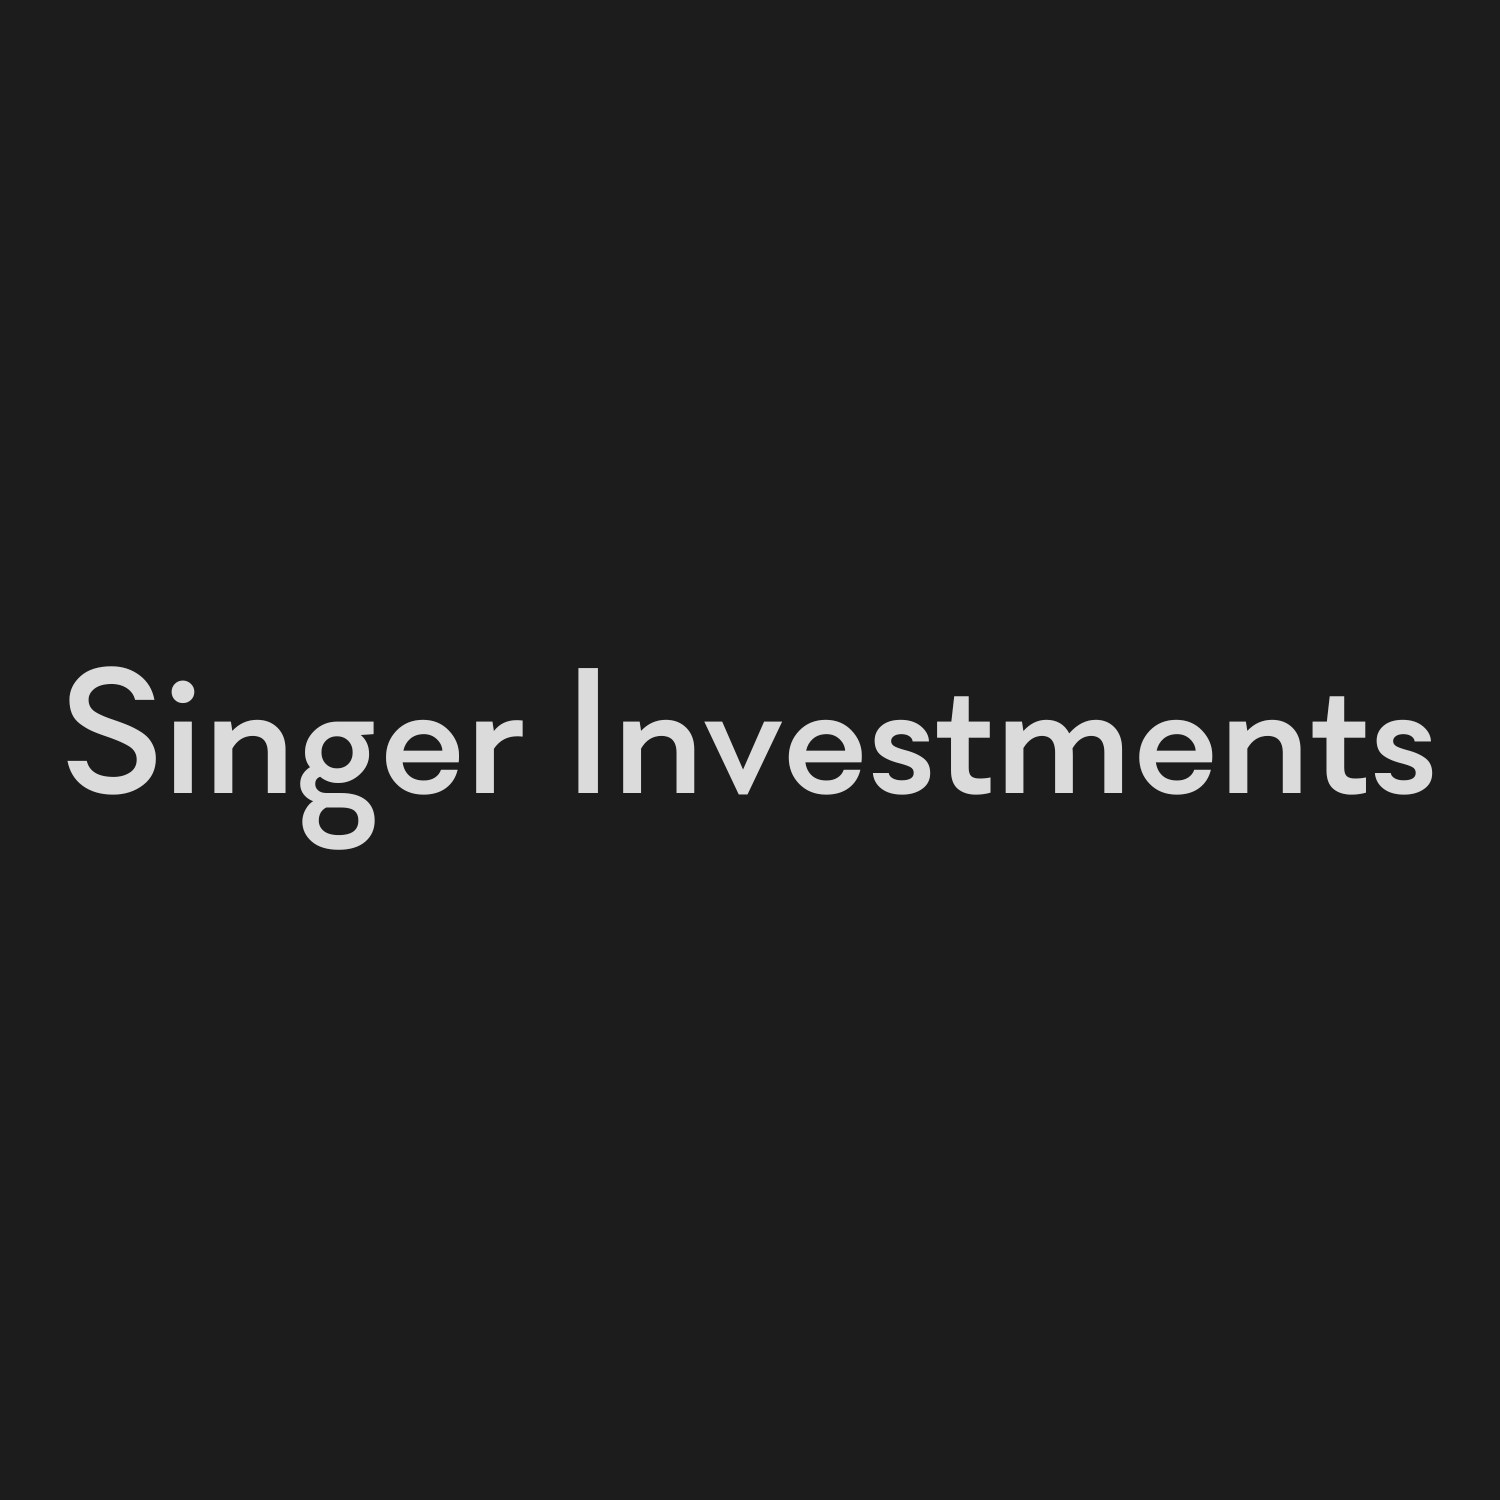 Singer Investments